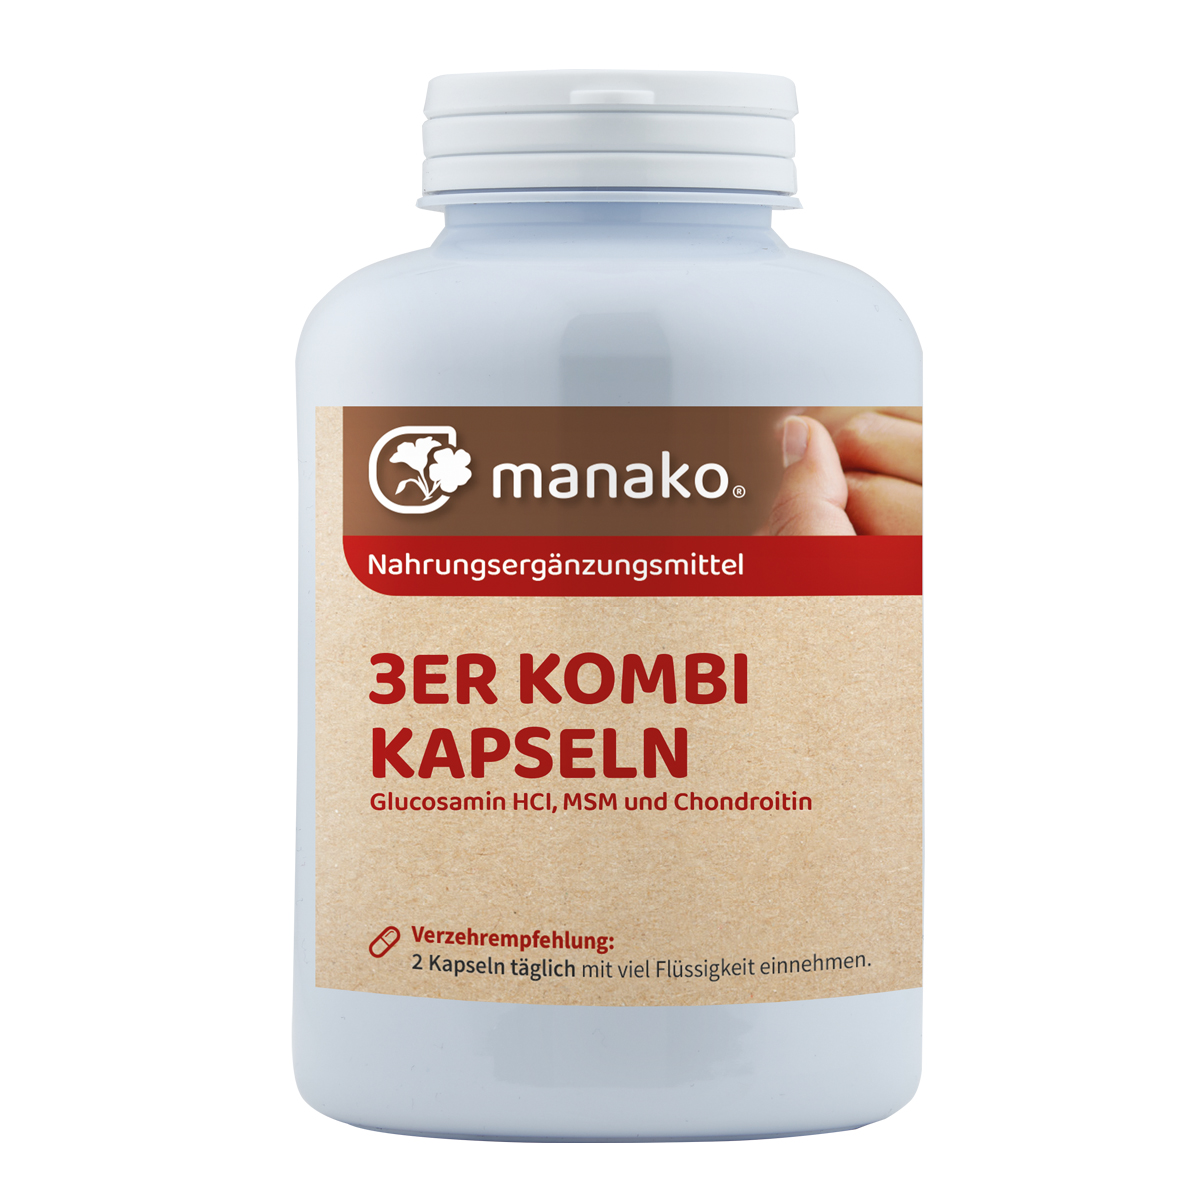 manako 3er KOMBI Kapseln Glucosamin MSM Chondroitin, 300 Stück, 199,5 g